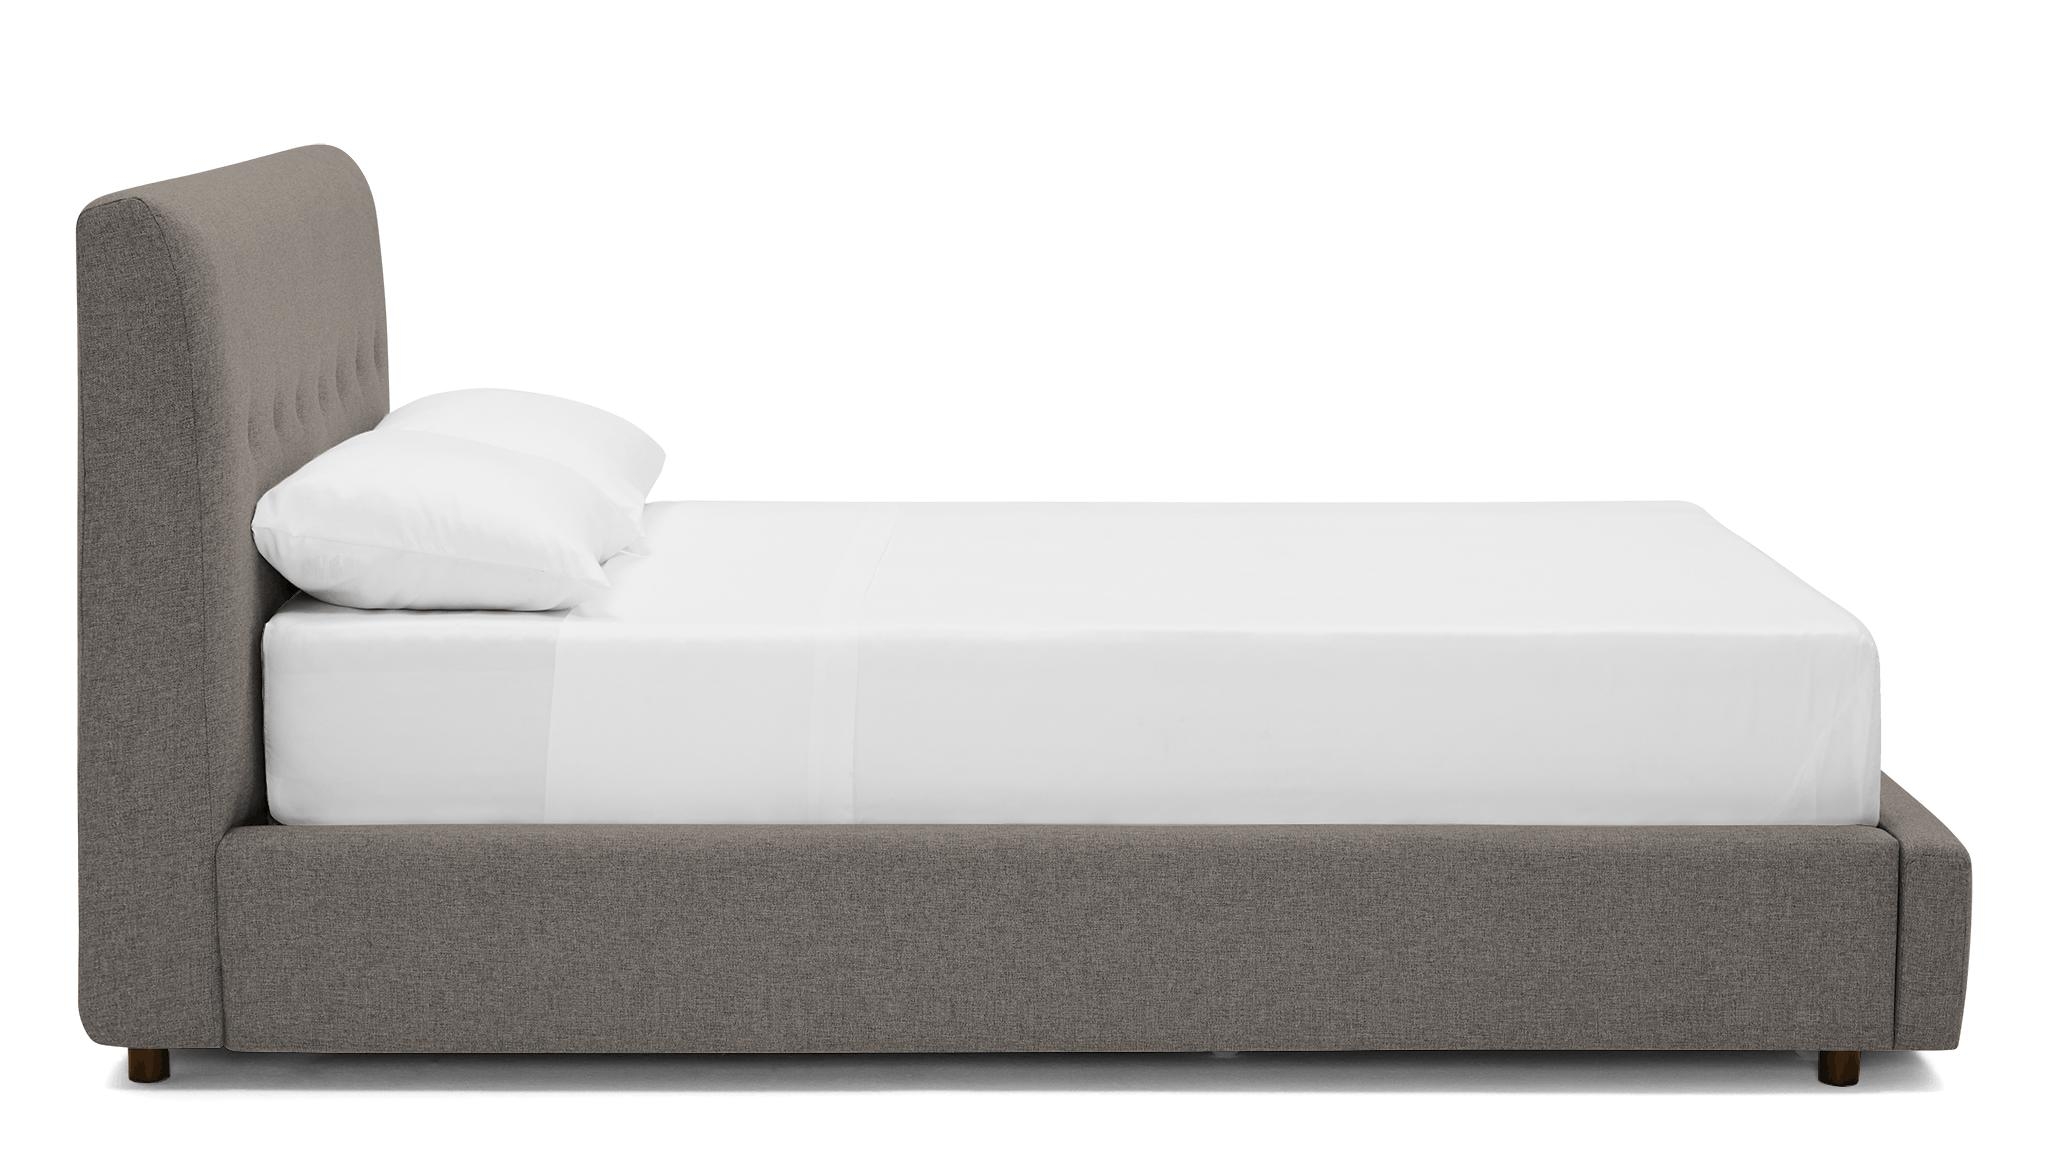 Gray Alvin Mid Century Modern Storage Bed - Cody Slate - Mocha - Queen - Image 2